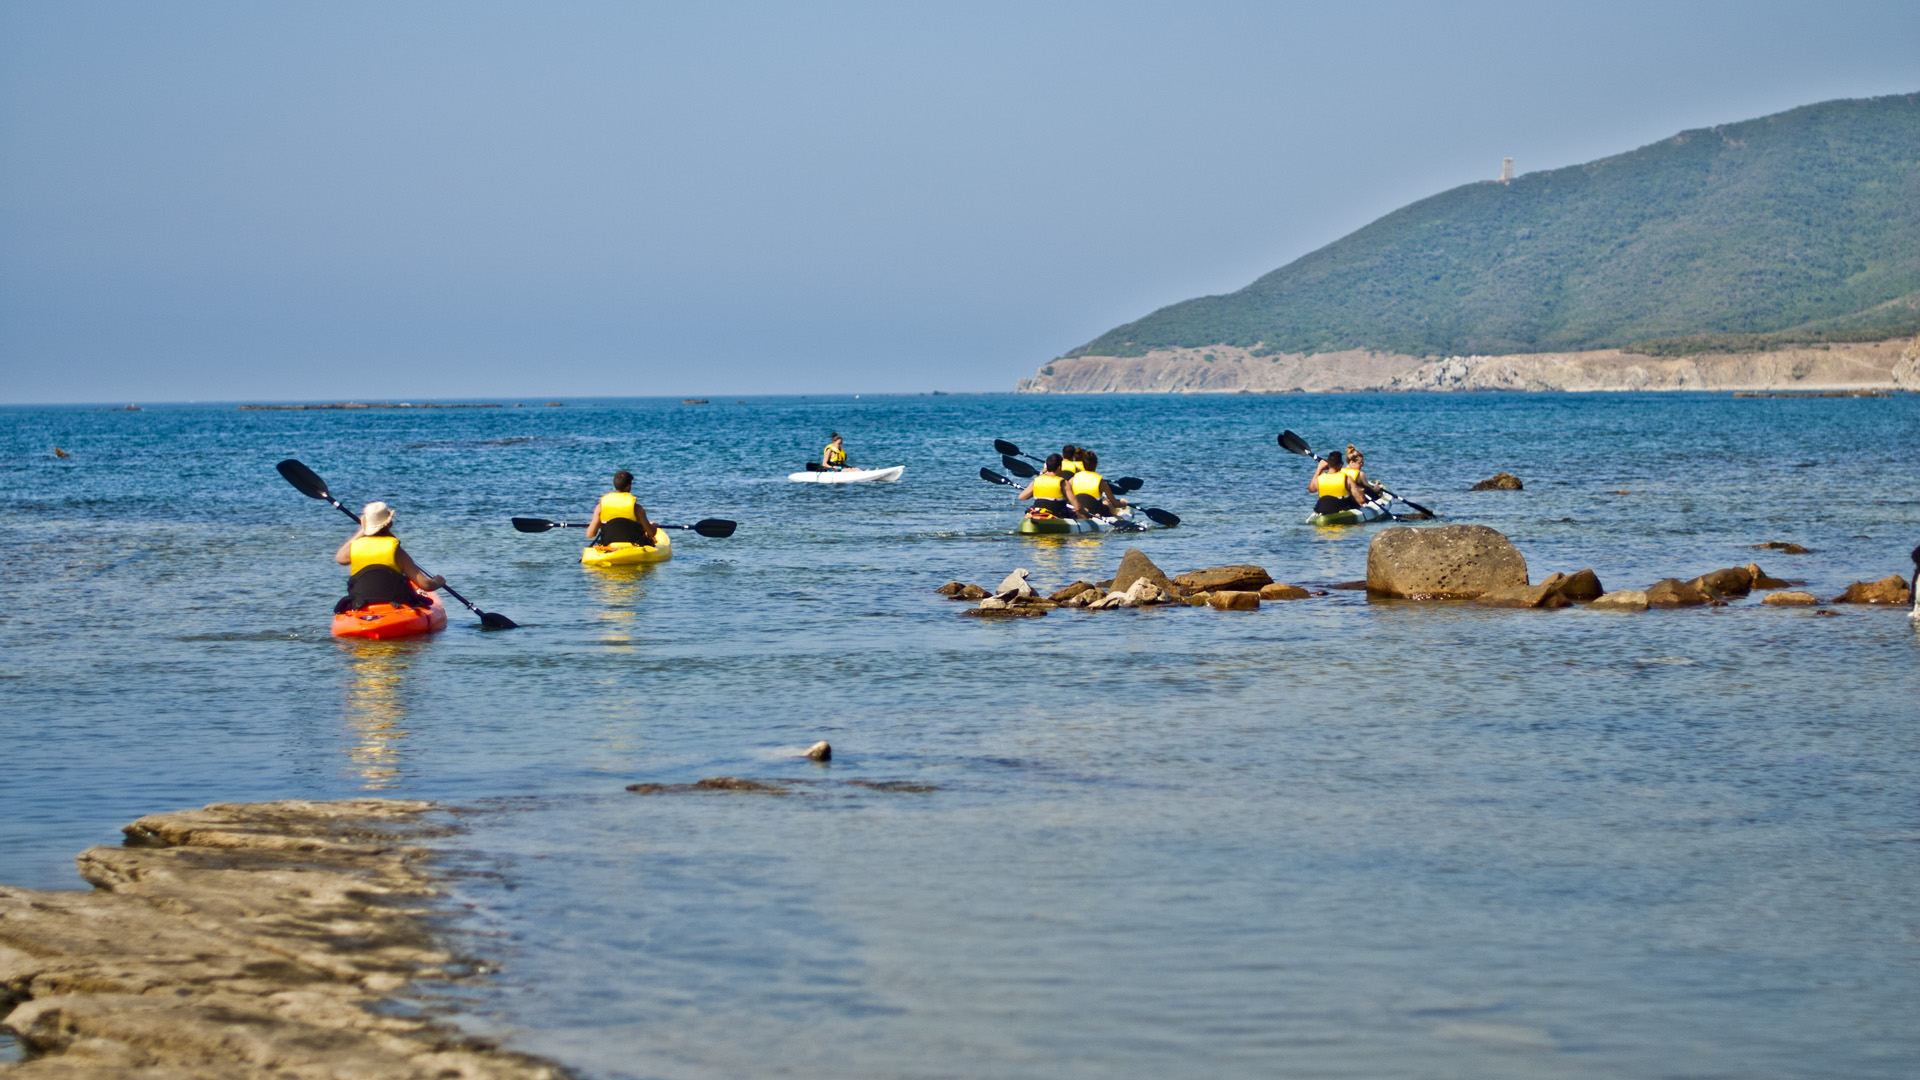 Kayaking in the straight of gibraltar